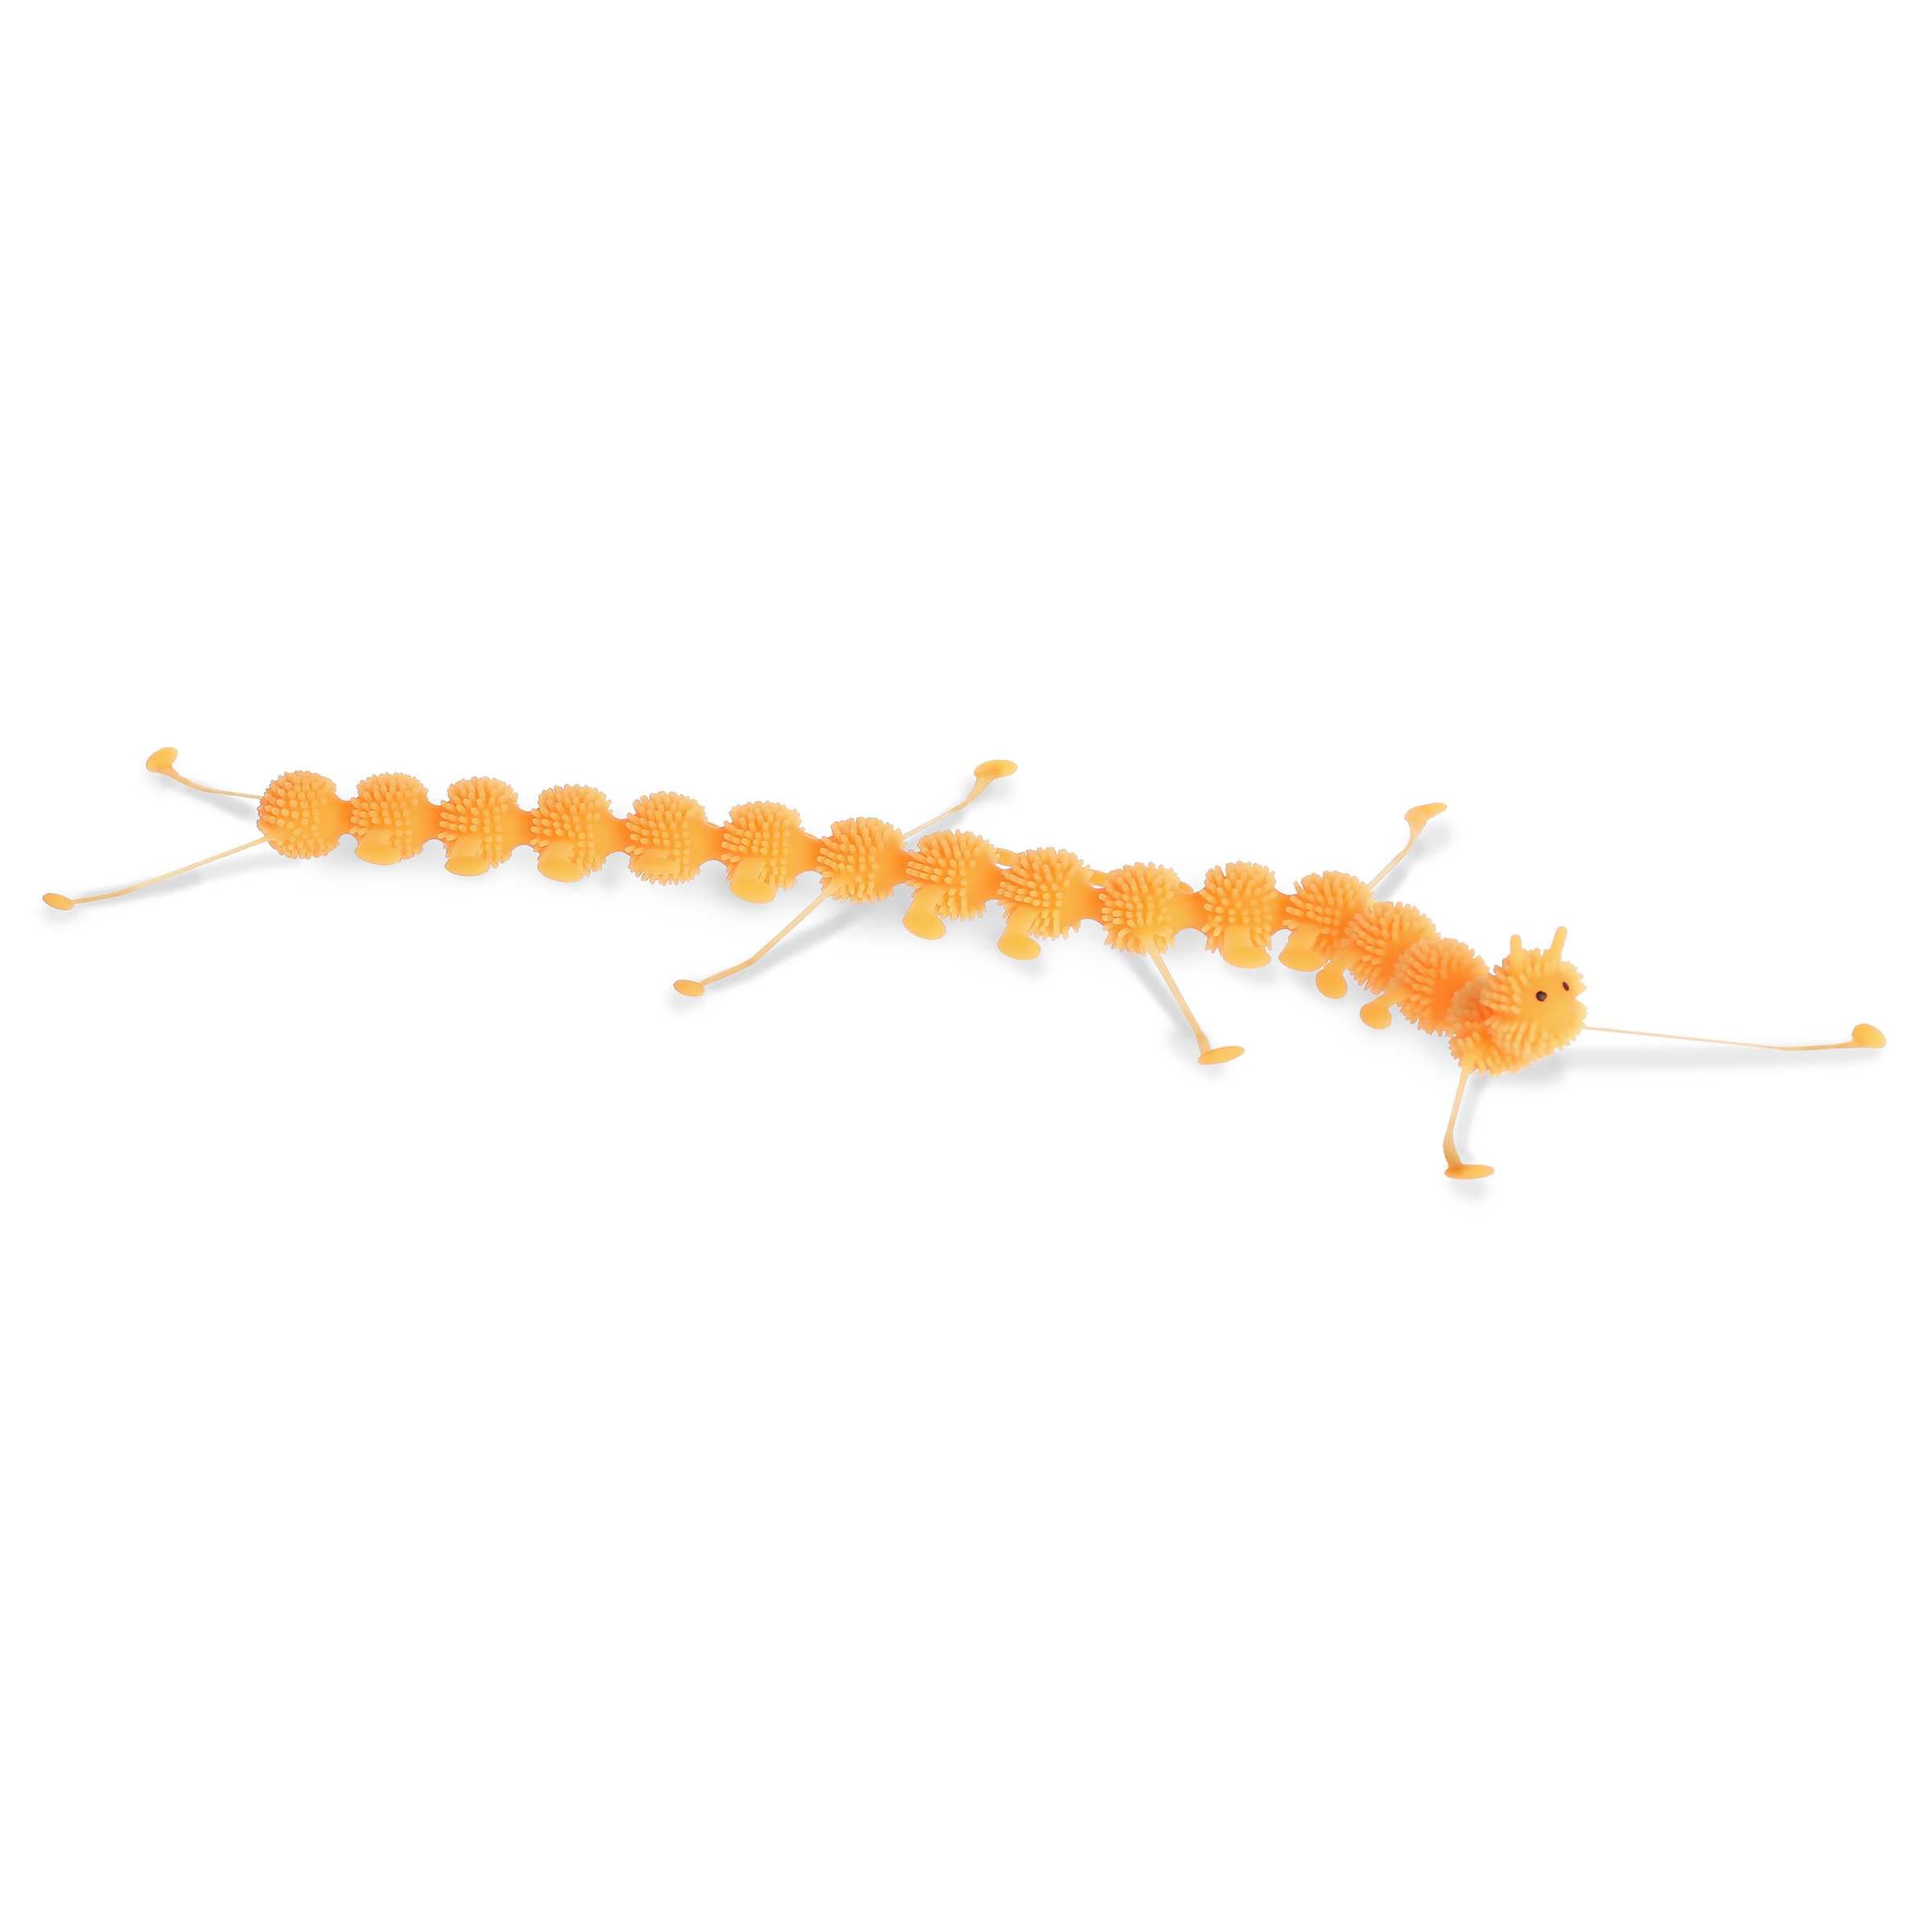 Aurora® Toys - Stretchy Caterpillar